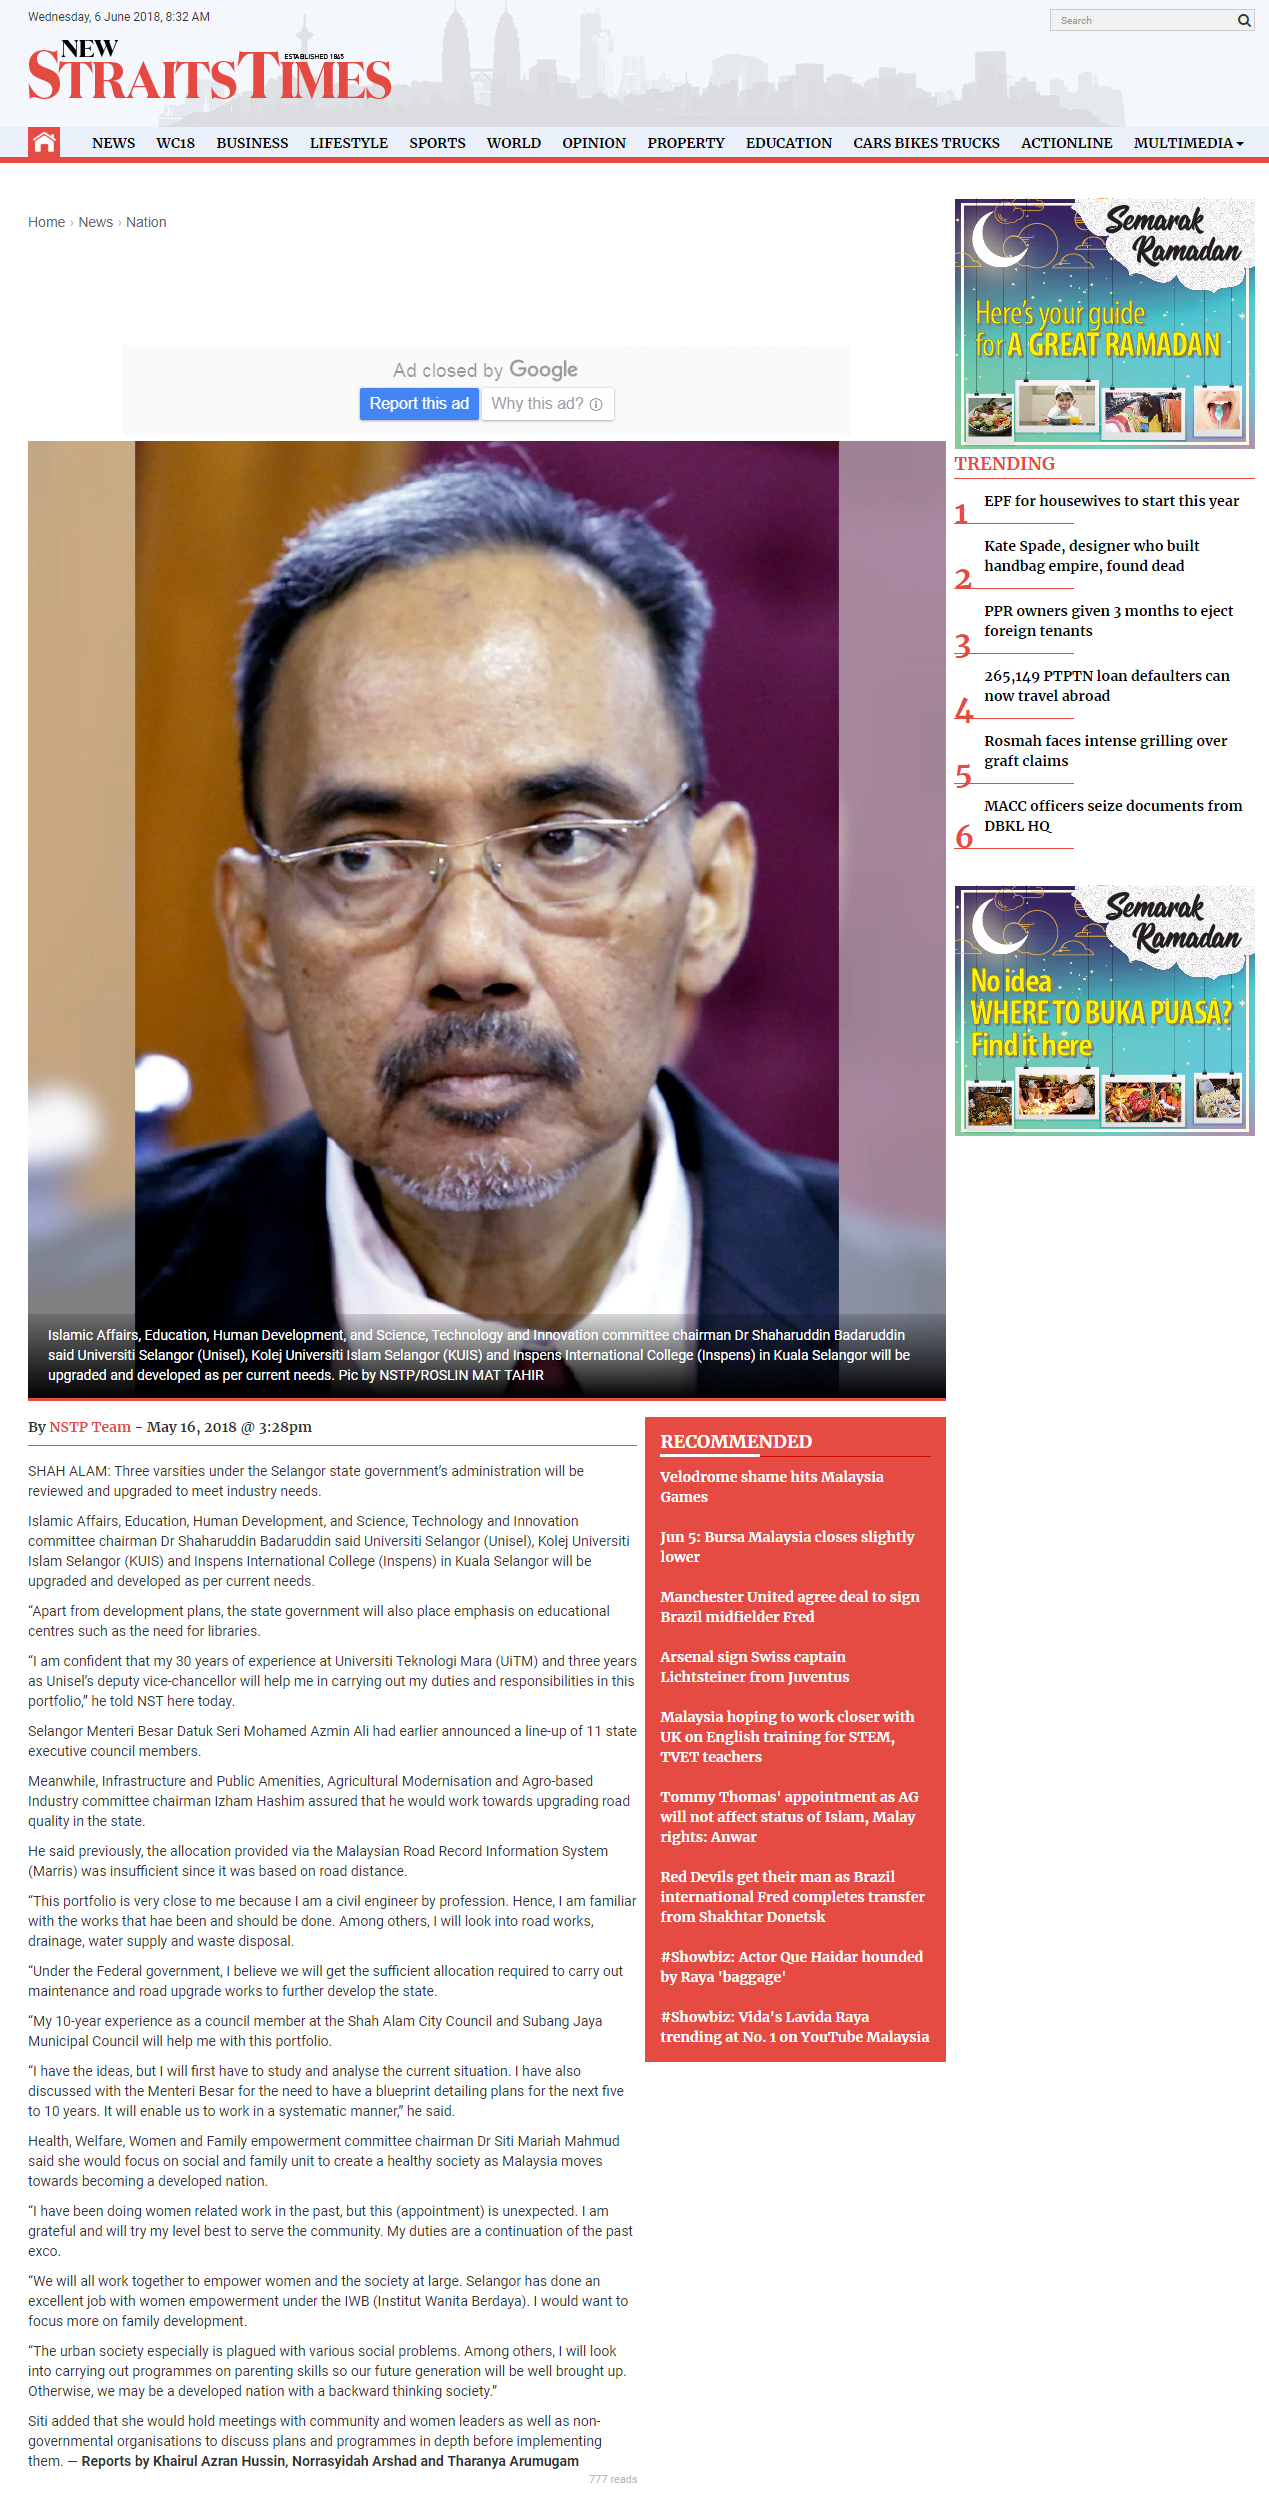 FireShot Capture 61 - Three varsities under Selangor state g_ - https___www.nst.com.my_news_nation